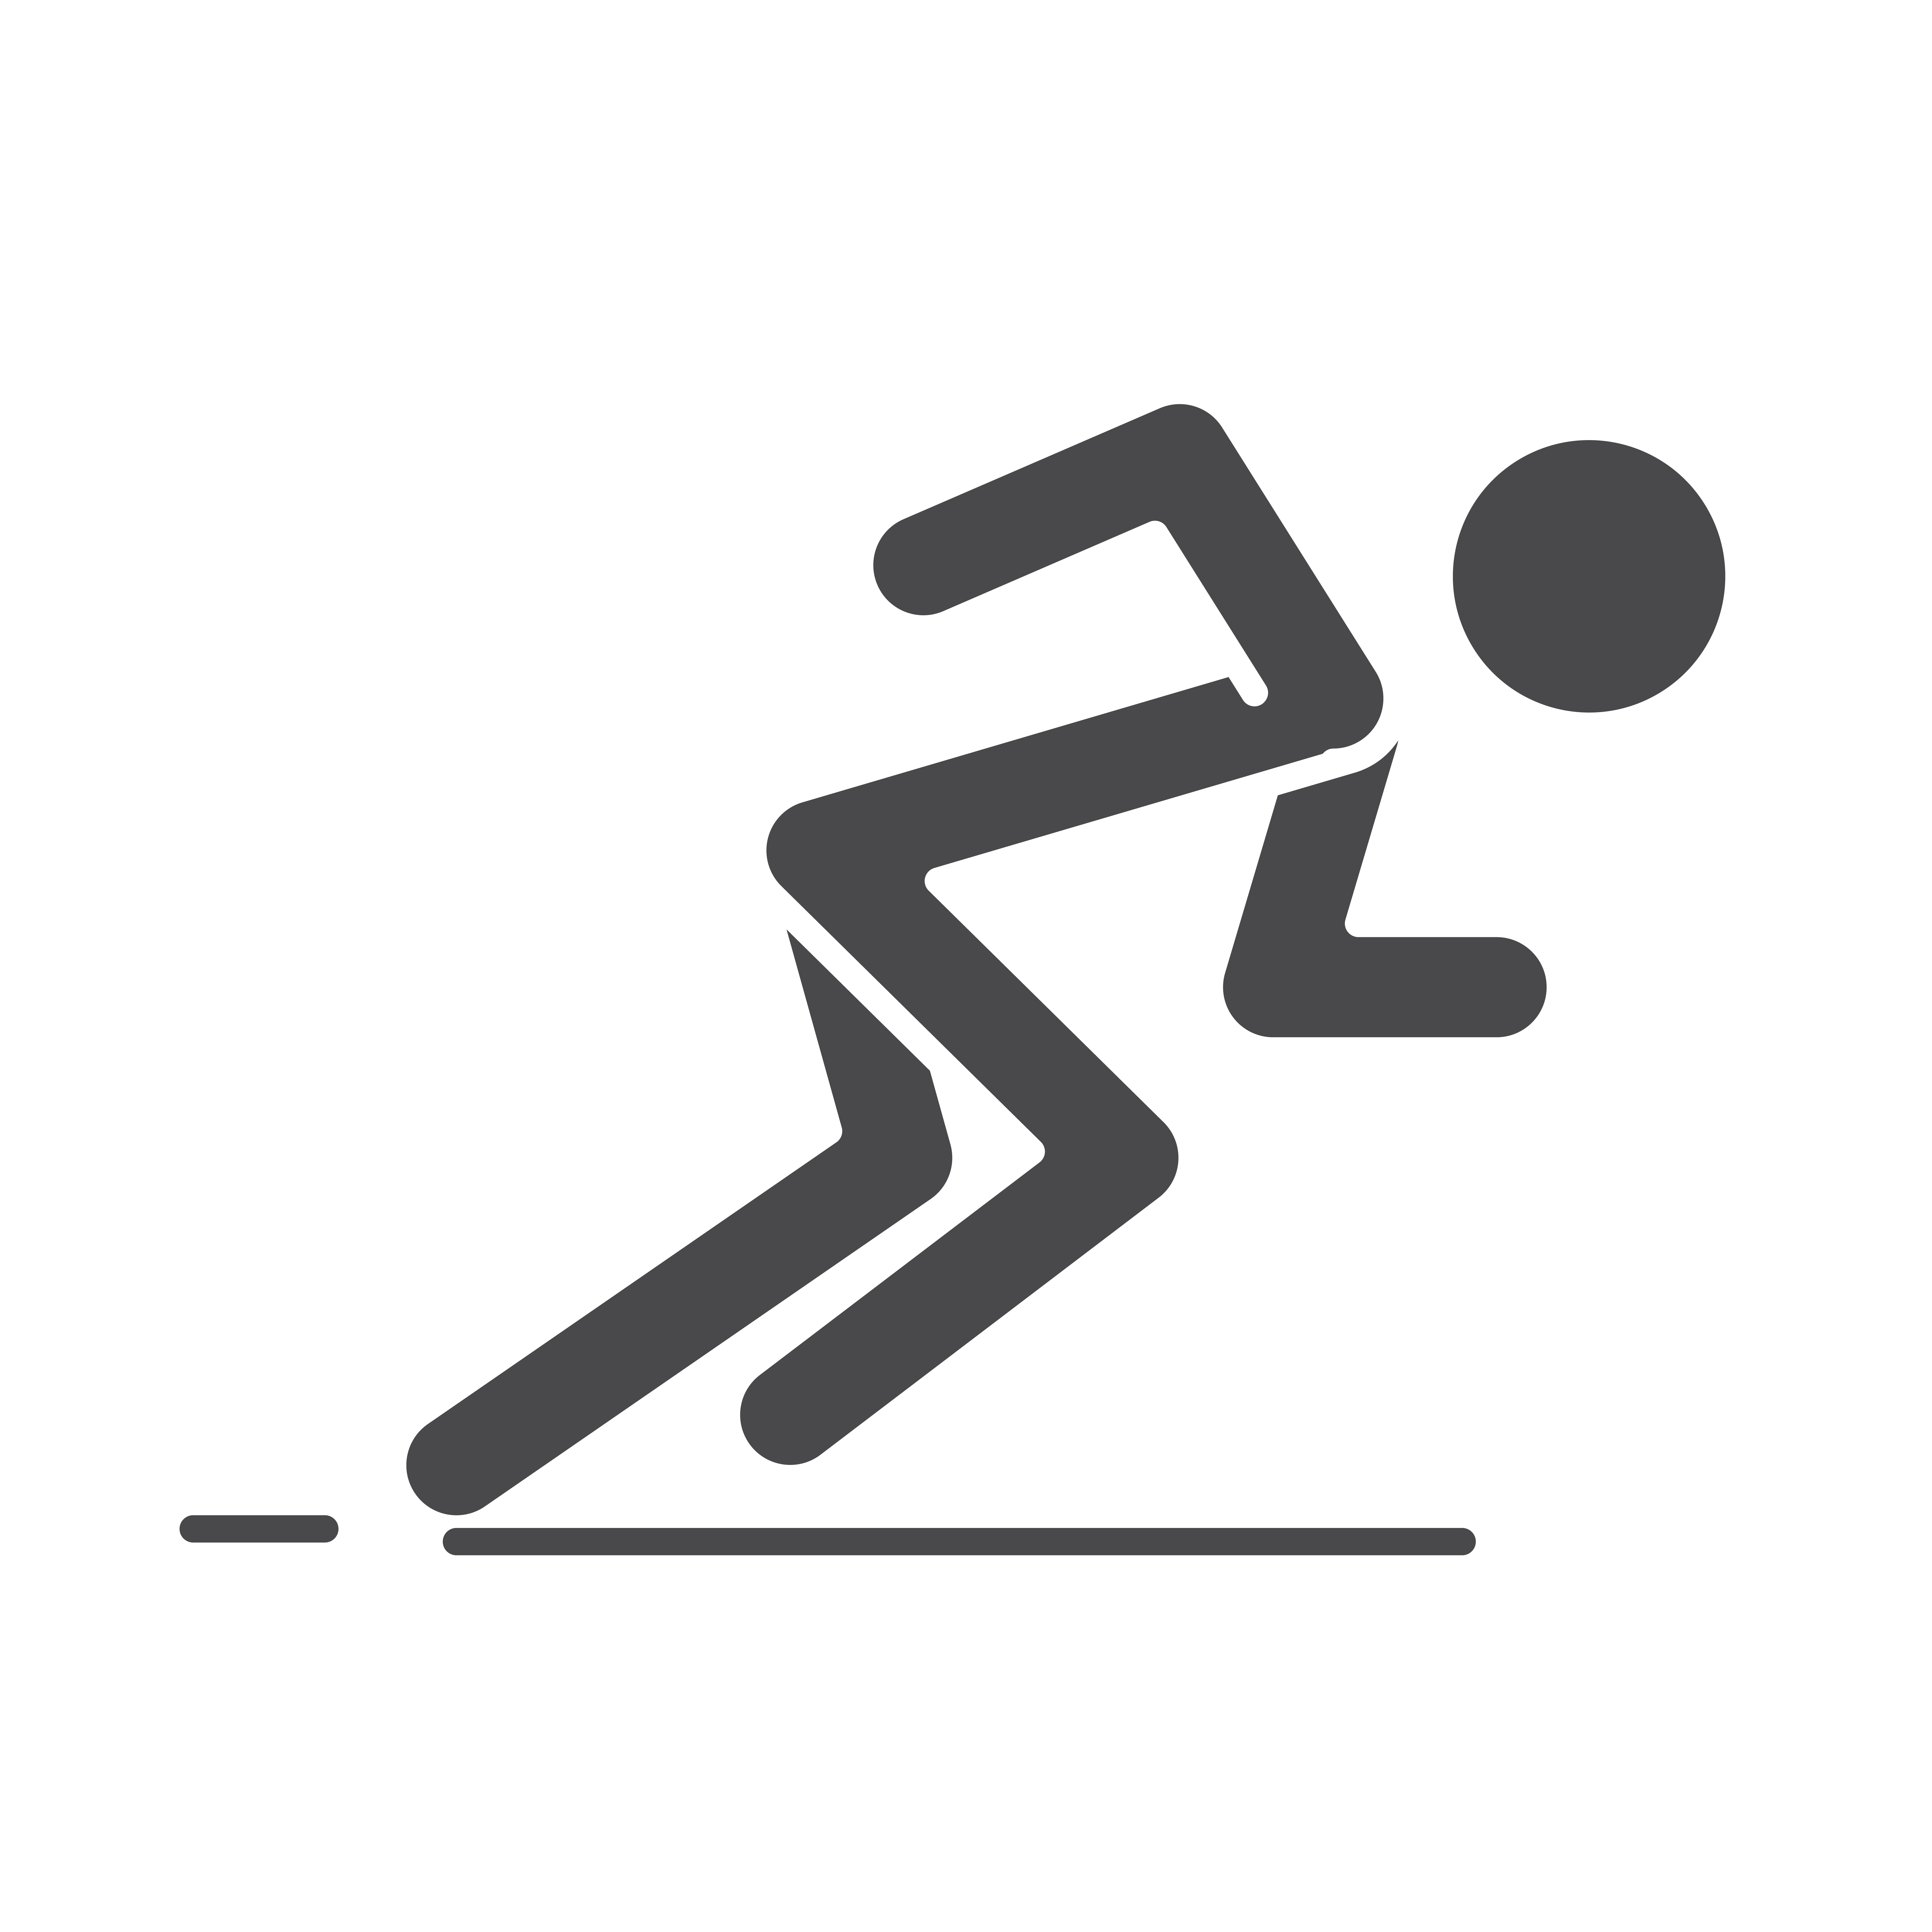 Speed running icon cartoon style Royalty Free Vector Image